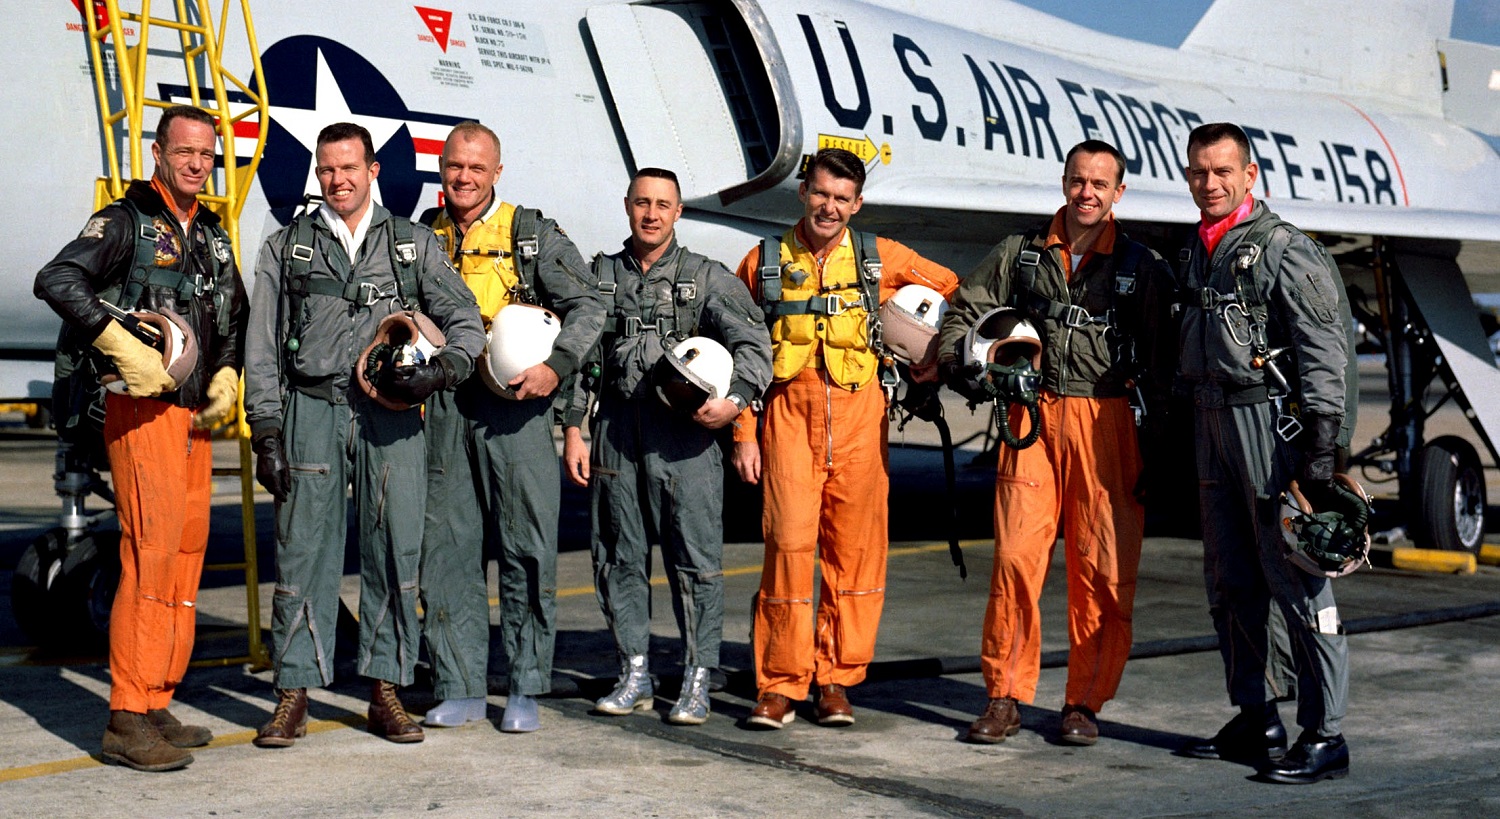 Standing beside a Convair F106-B aircraft in a January 1961 photograph are the nation's Project Mercury astronauts. Left to right, are M. Scott Carpenter, L. Gordon Cooper Jr., John H. Glenn Jr., Virgil I. "Gus" Grissom, Walter M. Schirra Jr., Alan B. Shepard Jr. and Donald K. "Deke" Slayton. Image Credit: NASA.